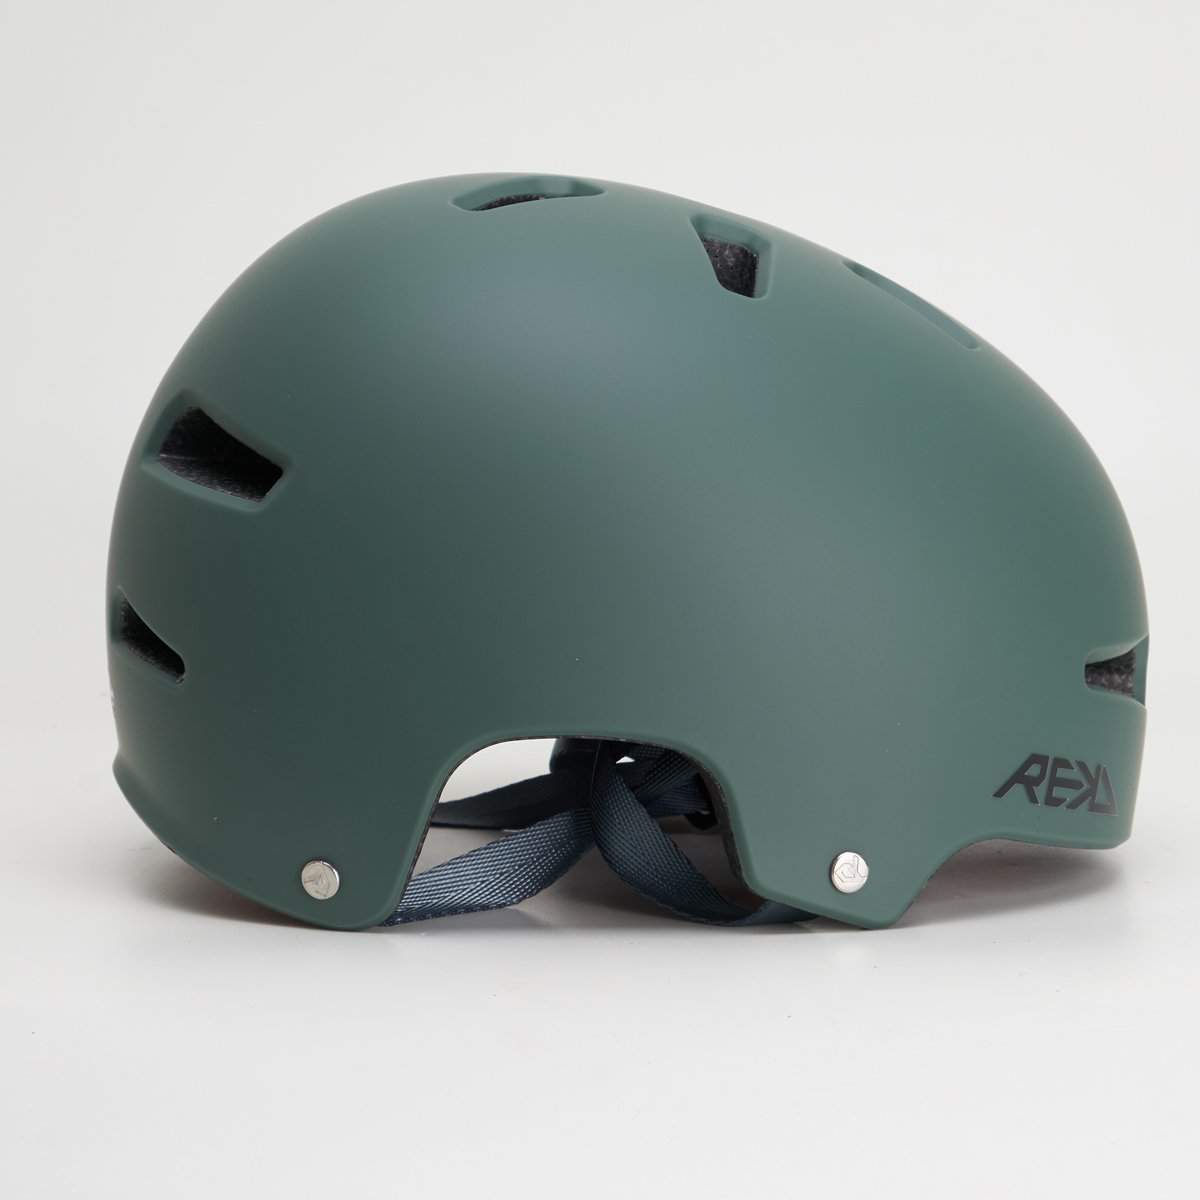 REKD Ultralite In Mold Green Helmet-REKD Protection-Aggressive Skate,green,Helmets,Protective Gear